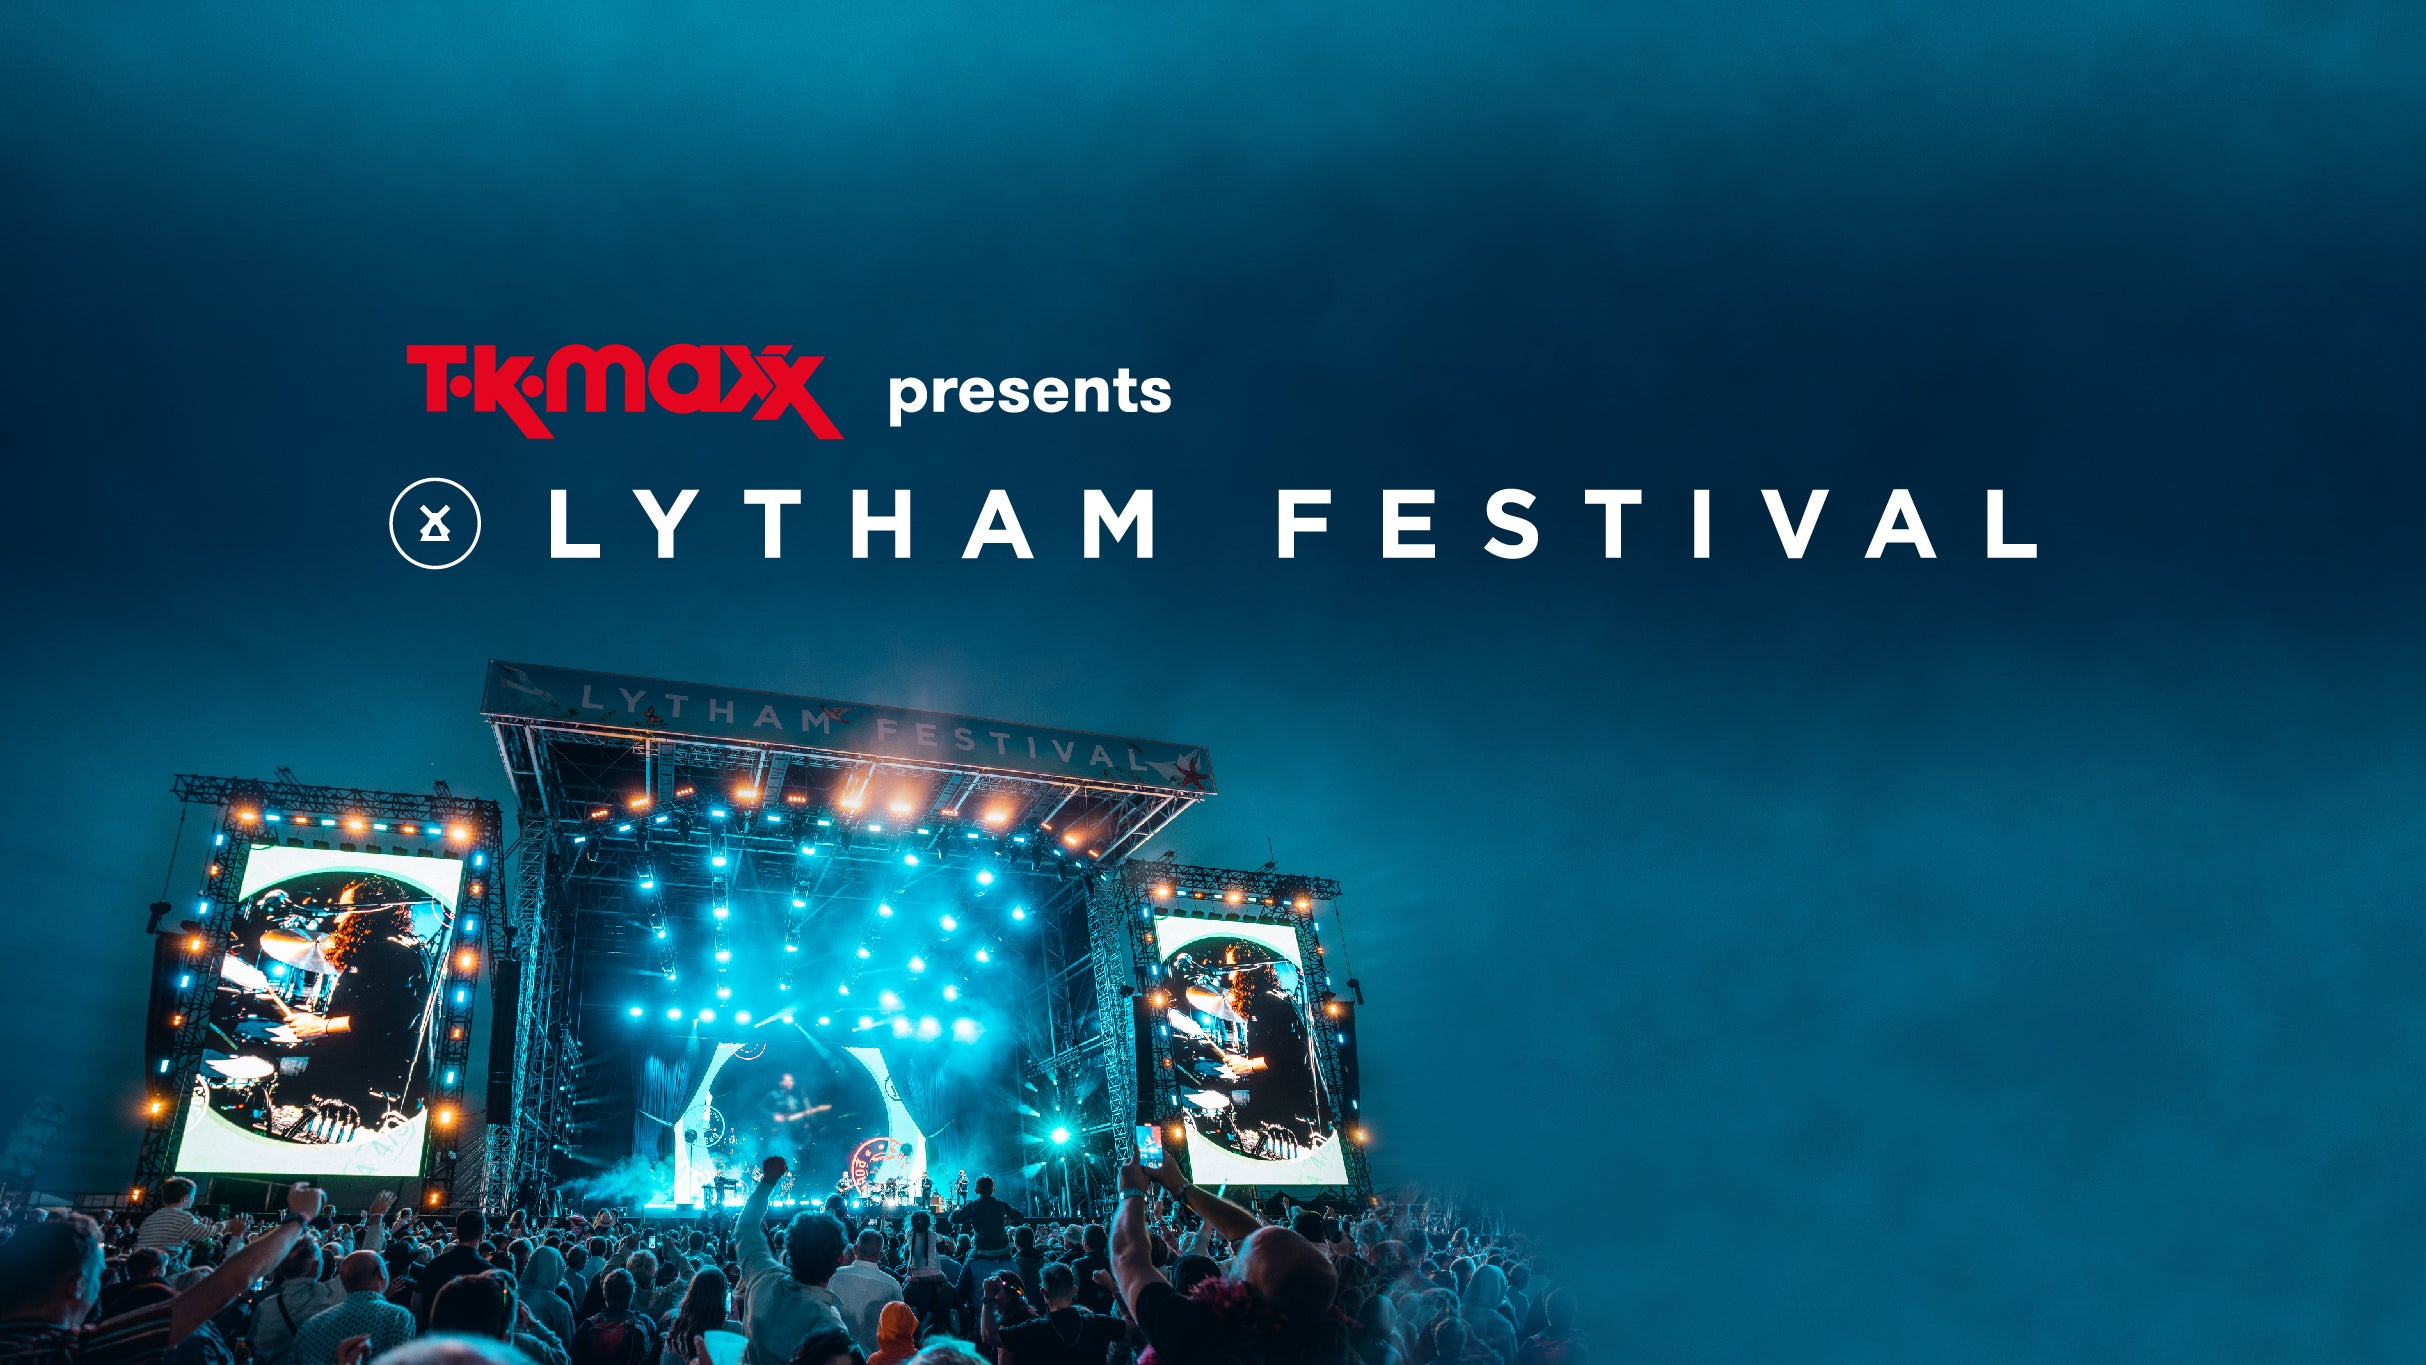 Lytham Festival - Shania Twain Event Title Pic